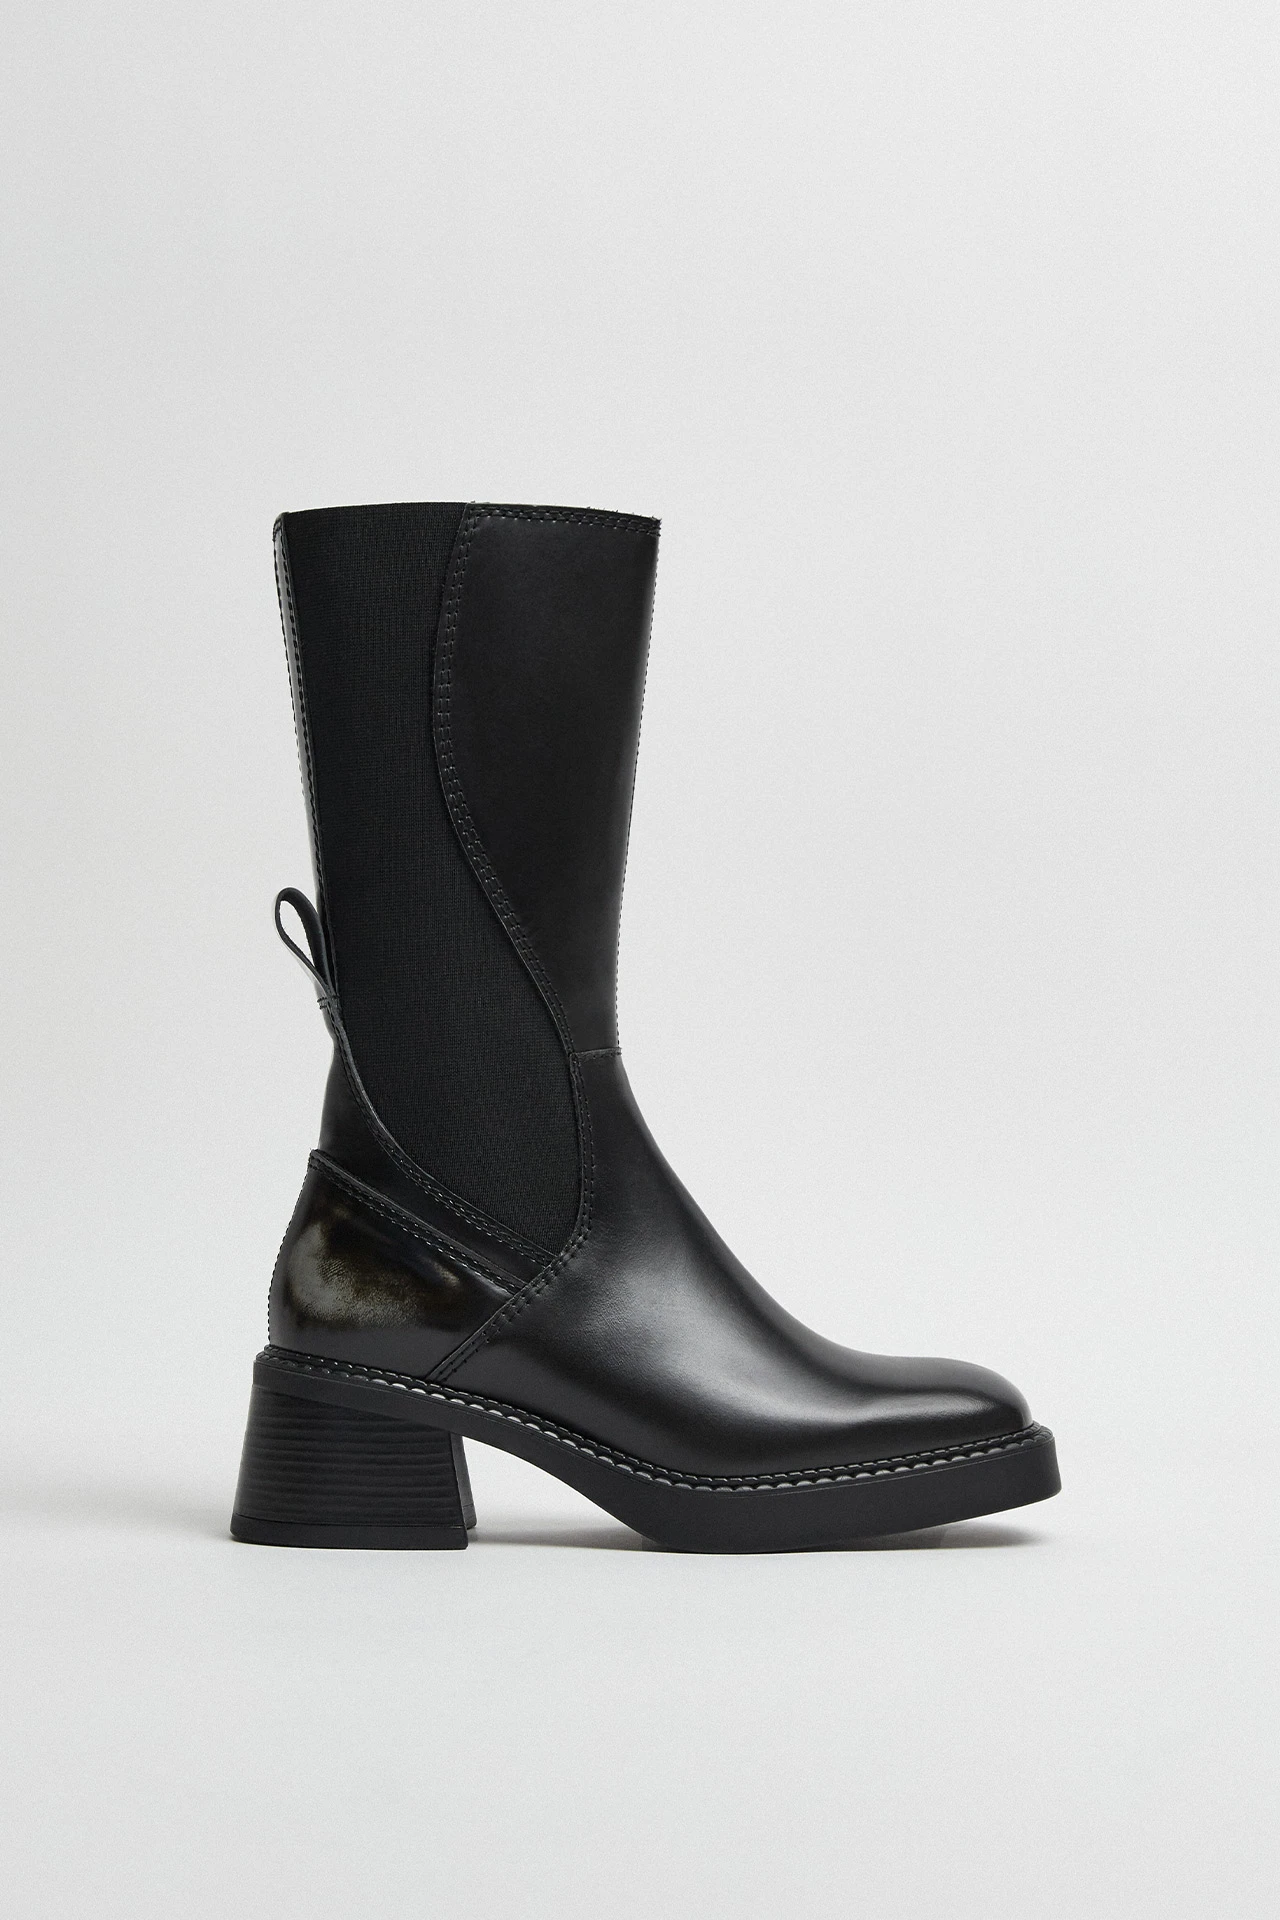 E8-flabia-grey-boots-01